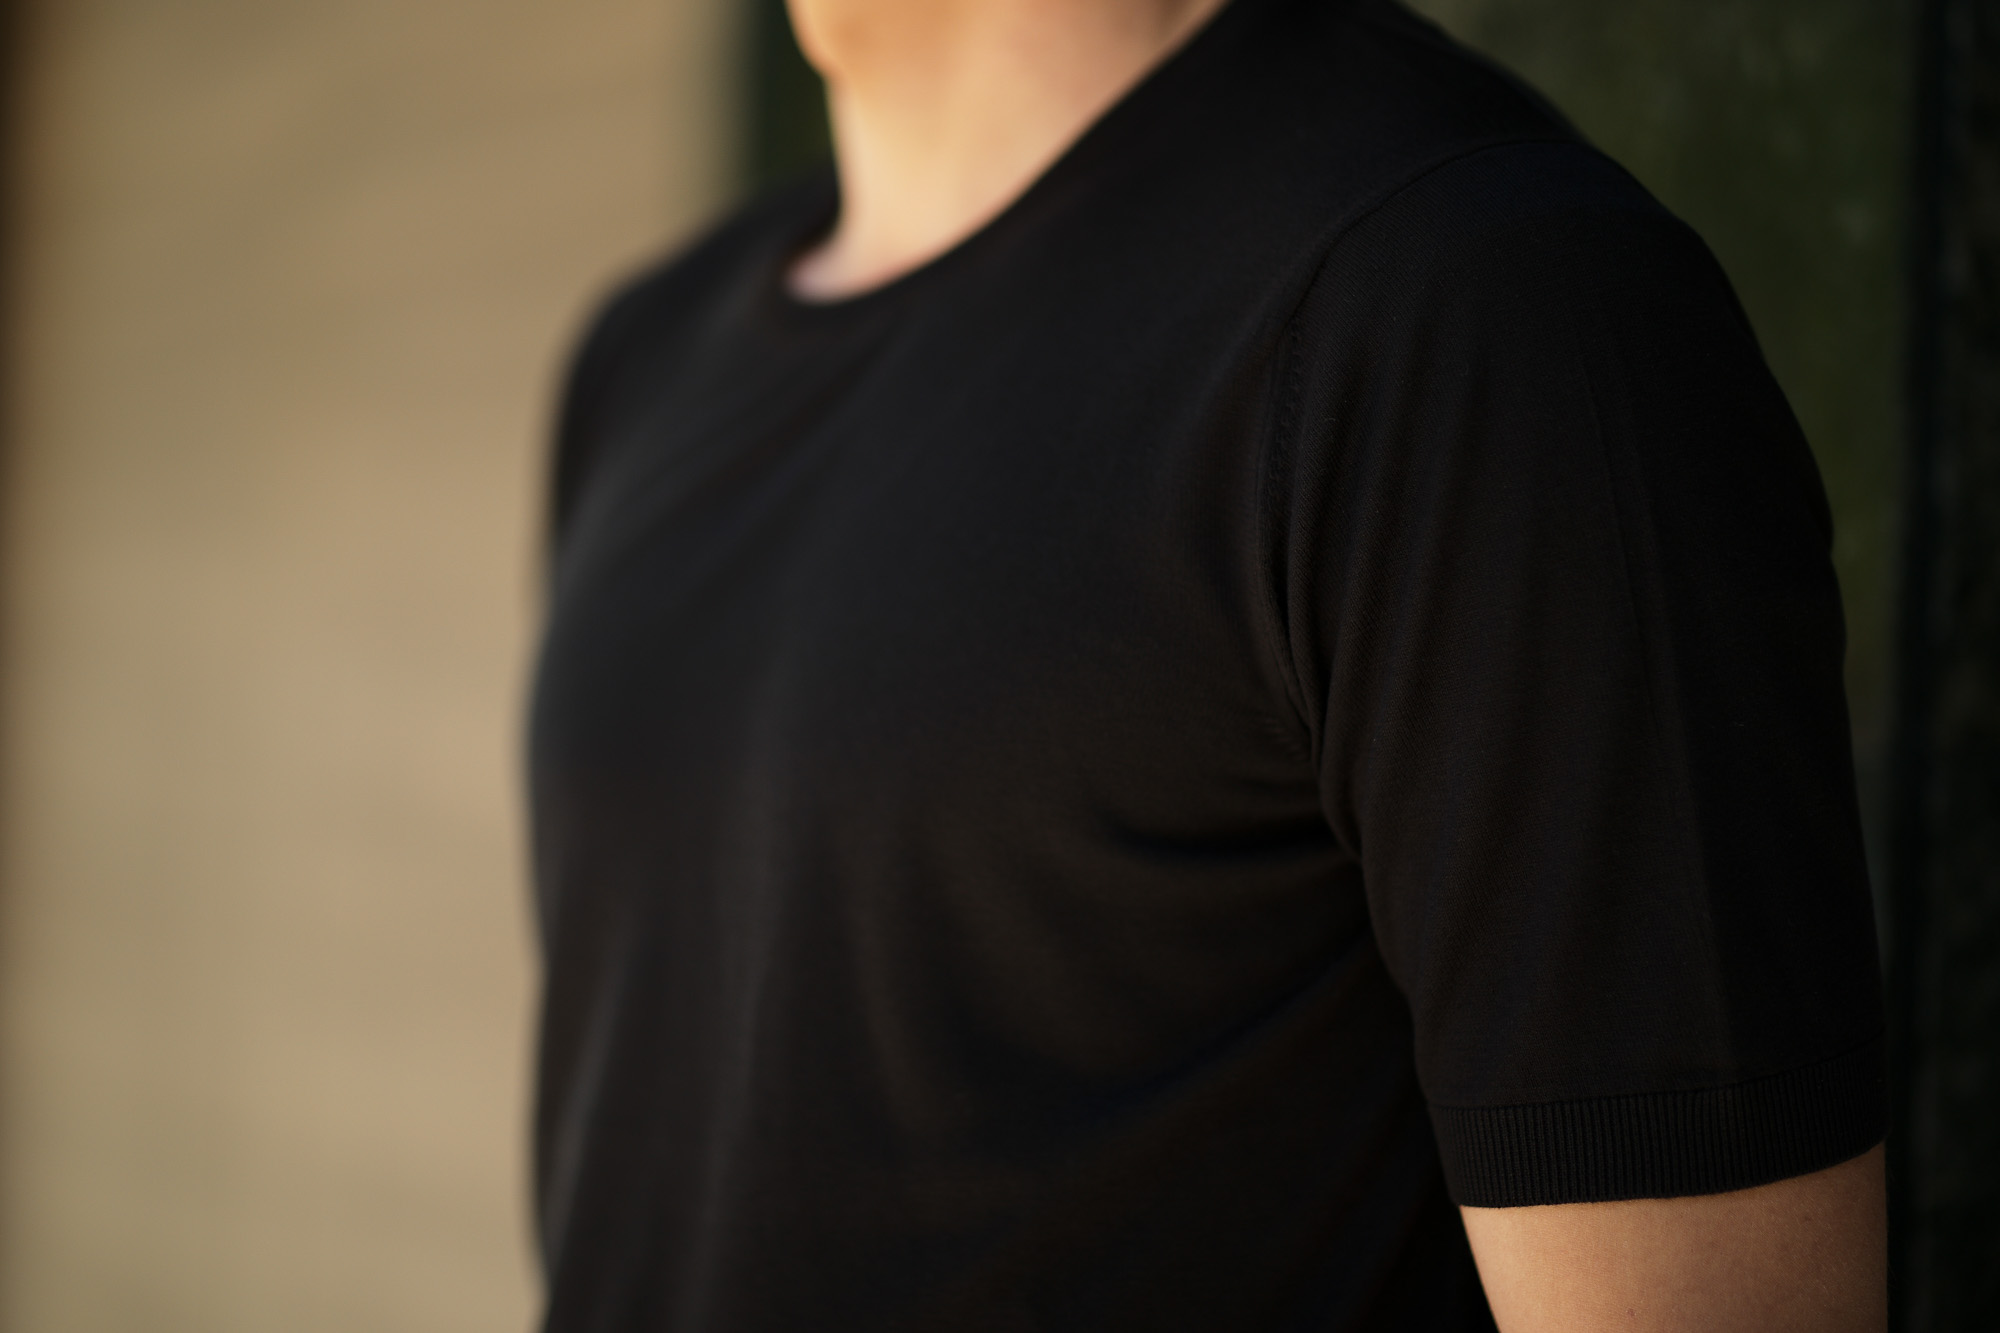 Gran Sasso (グランサッソ) Silk Knit T-shirt (シルクニット Tシャツ) SETA (シルク 100%) ショートスリーブ シルク ニット Tシャツ BLACK (ブラック・099) made in italy (イタリア製) 2019 春夏新作 gransasso 愛知 名古屋 altoediritto アルトエデリット